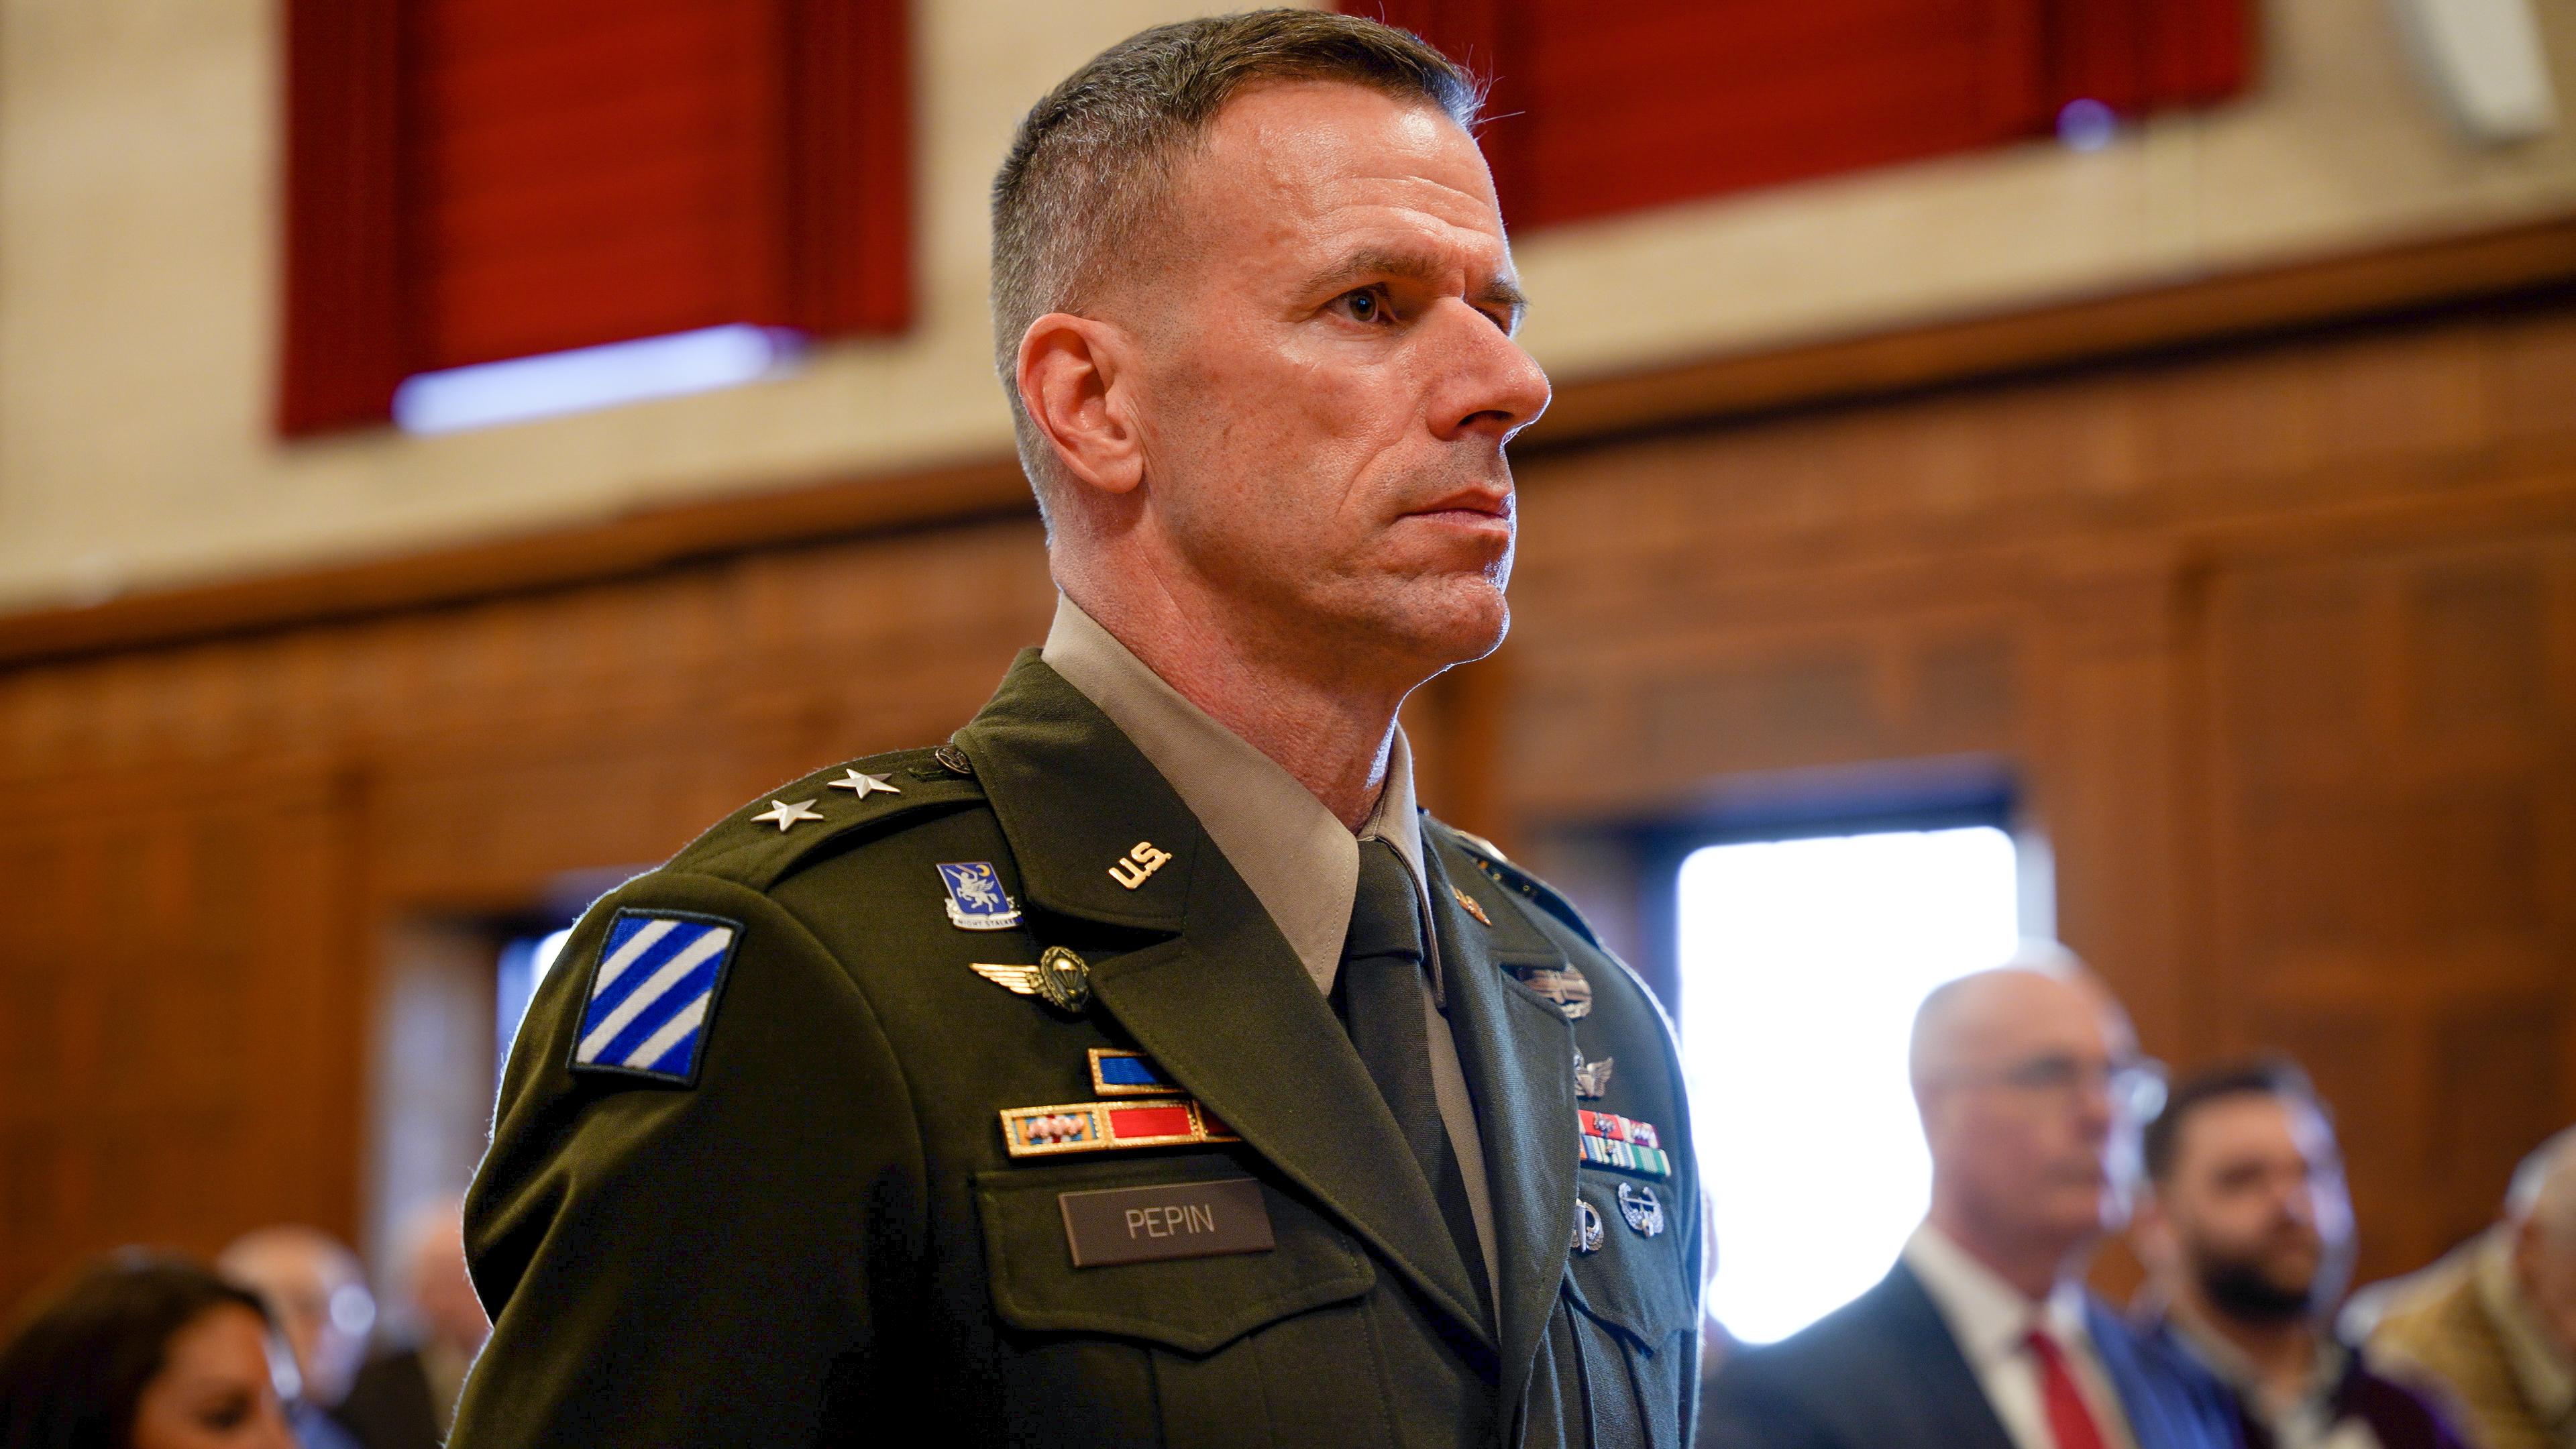 a man in military uniform looks ahead